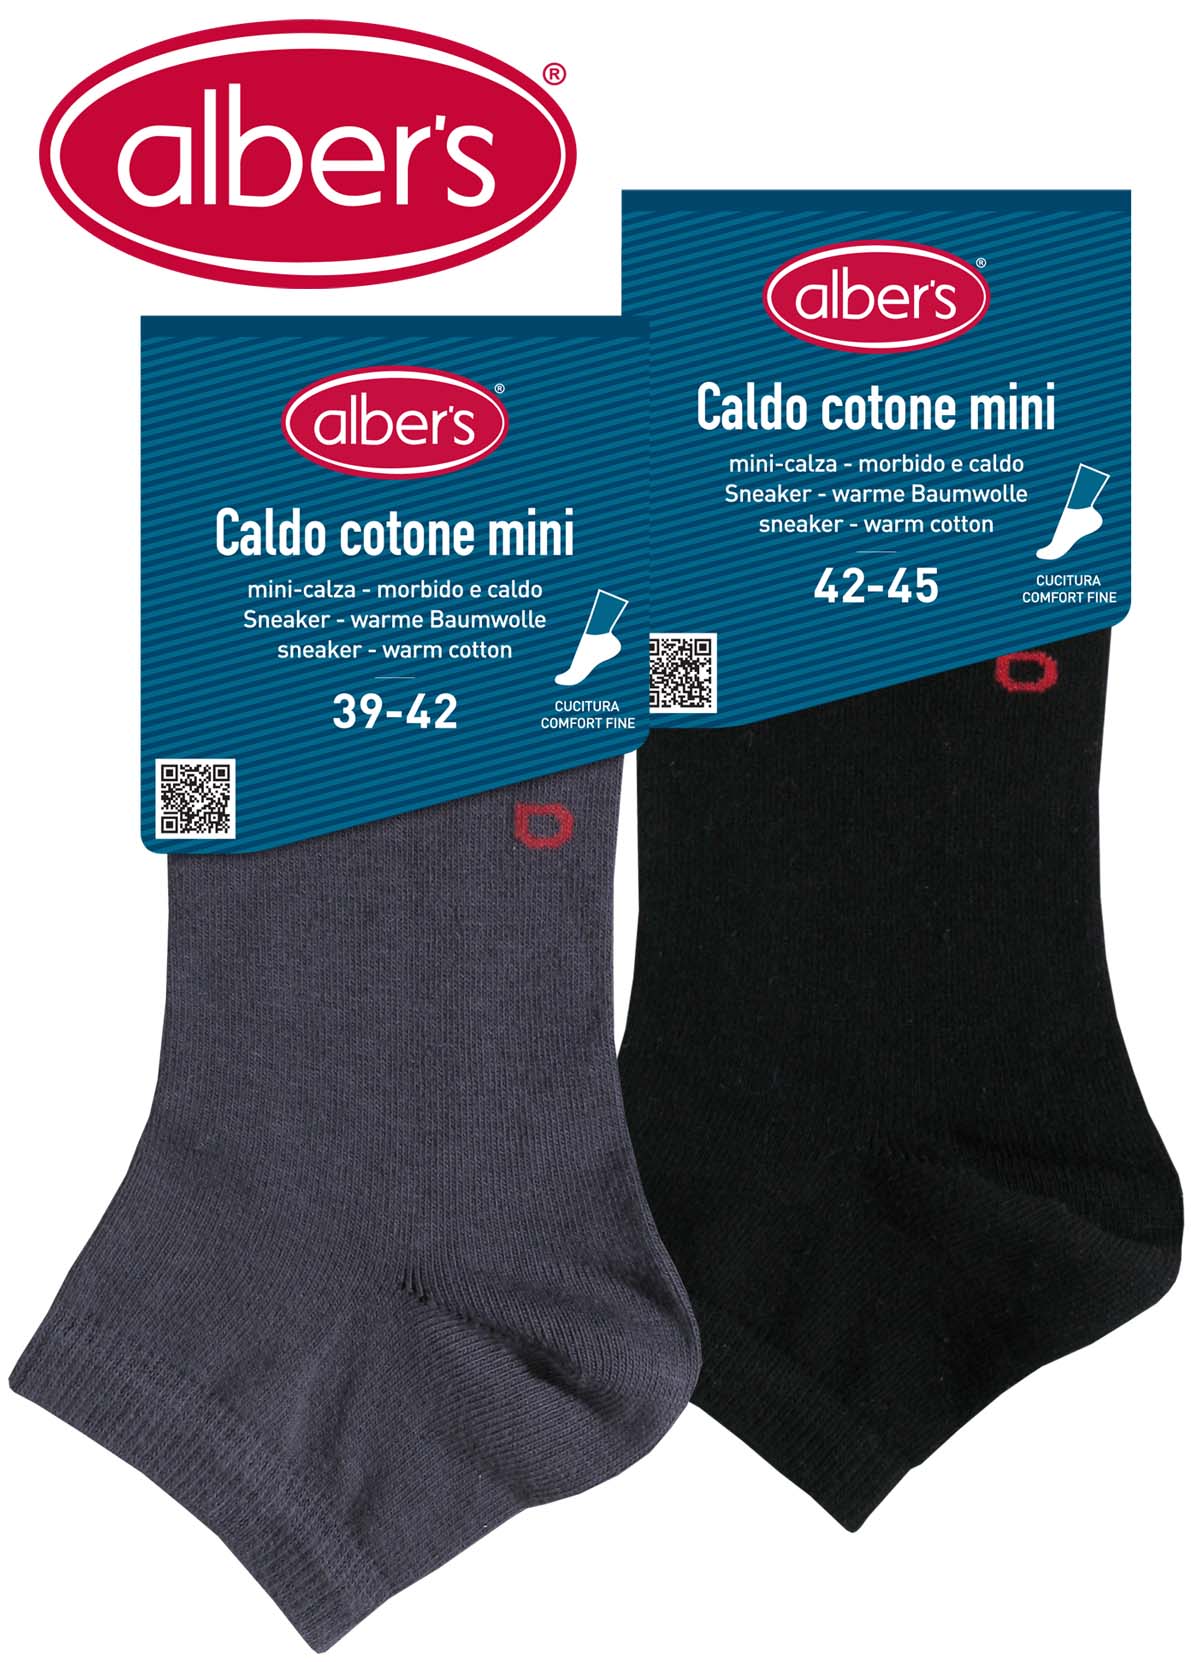 Albers (552) Sock Caldo cotone mini